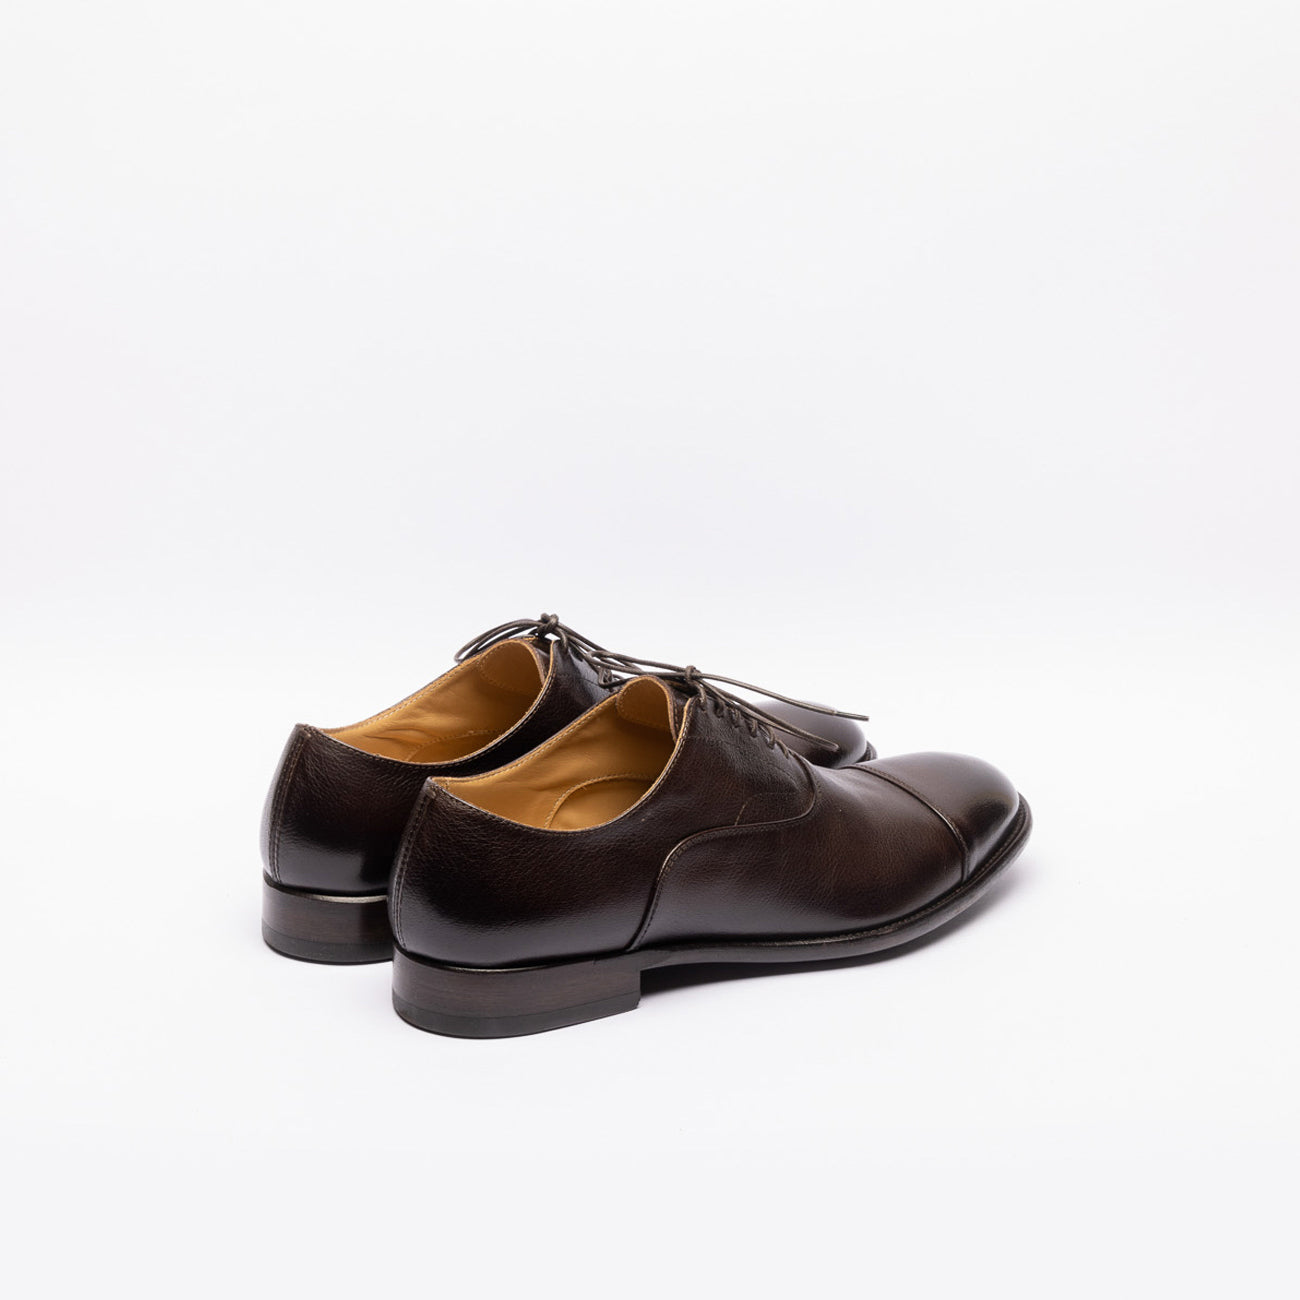 Fasciani Abel 59012 brown leather oxford shoe